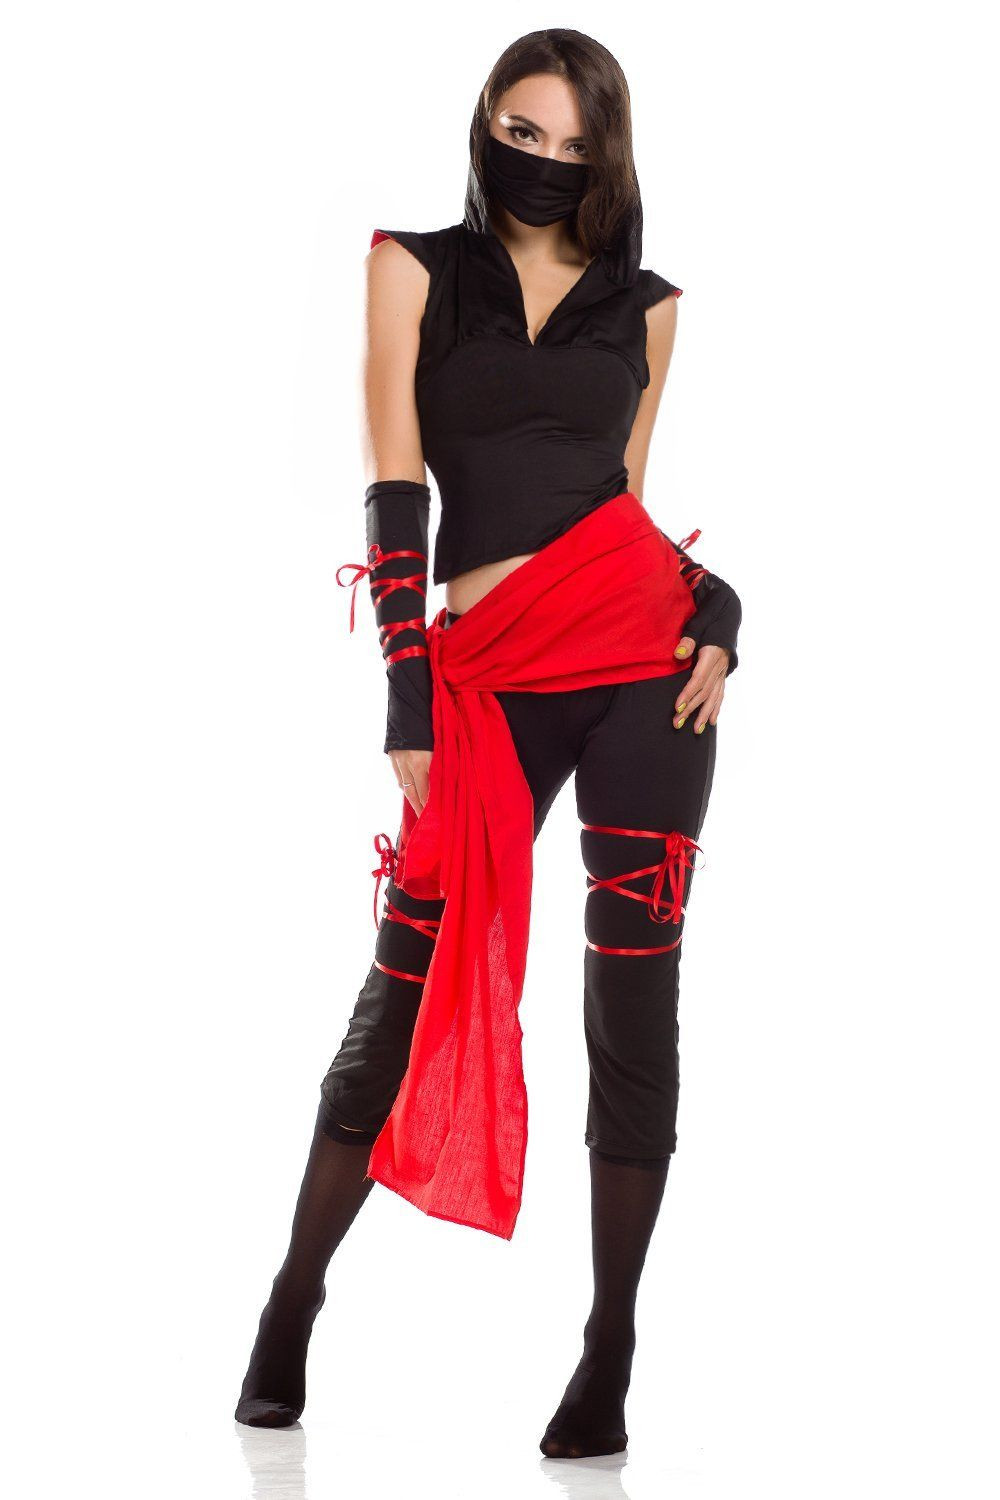 Female Ninja Costume DIY
 Pin on Halloween Costumes